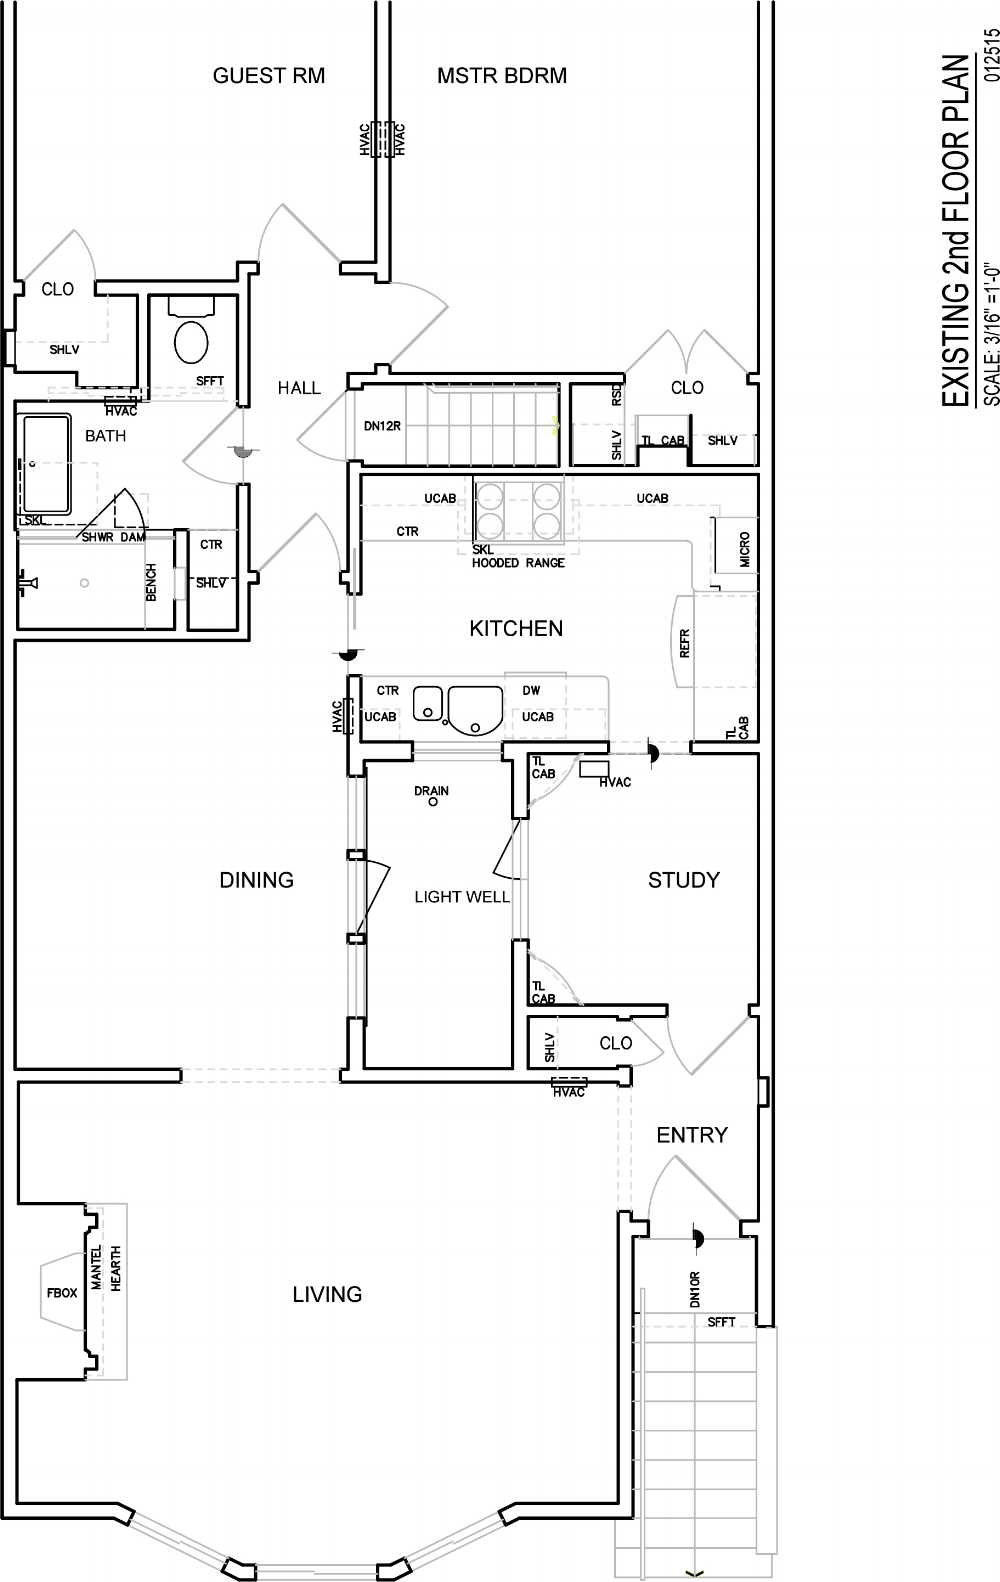 Design Plan For Kitchen Renovation Floor Plans Space Layout Ideas